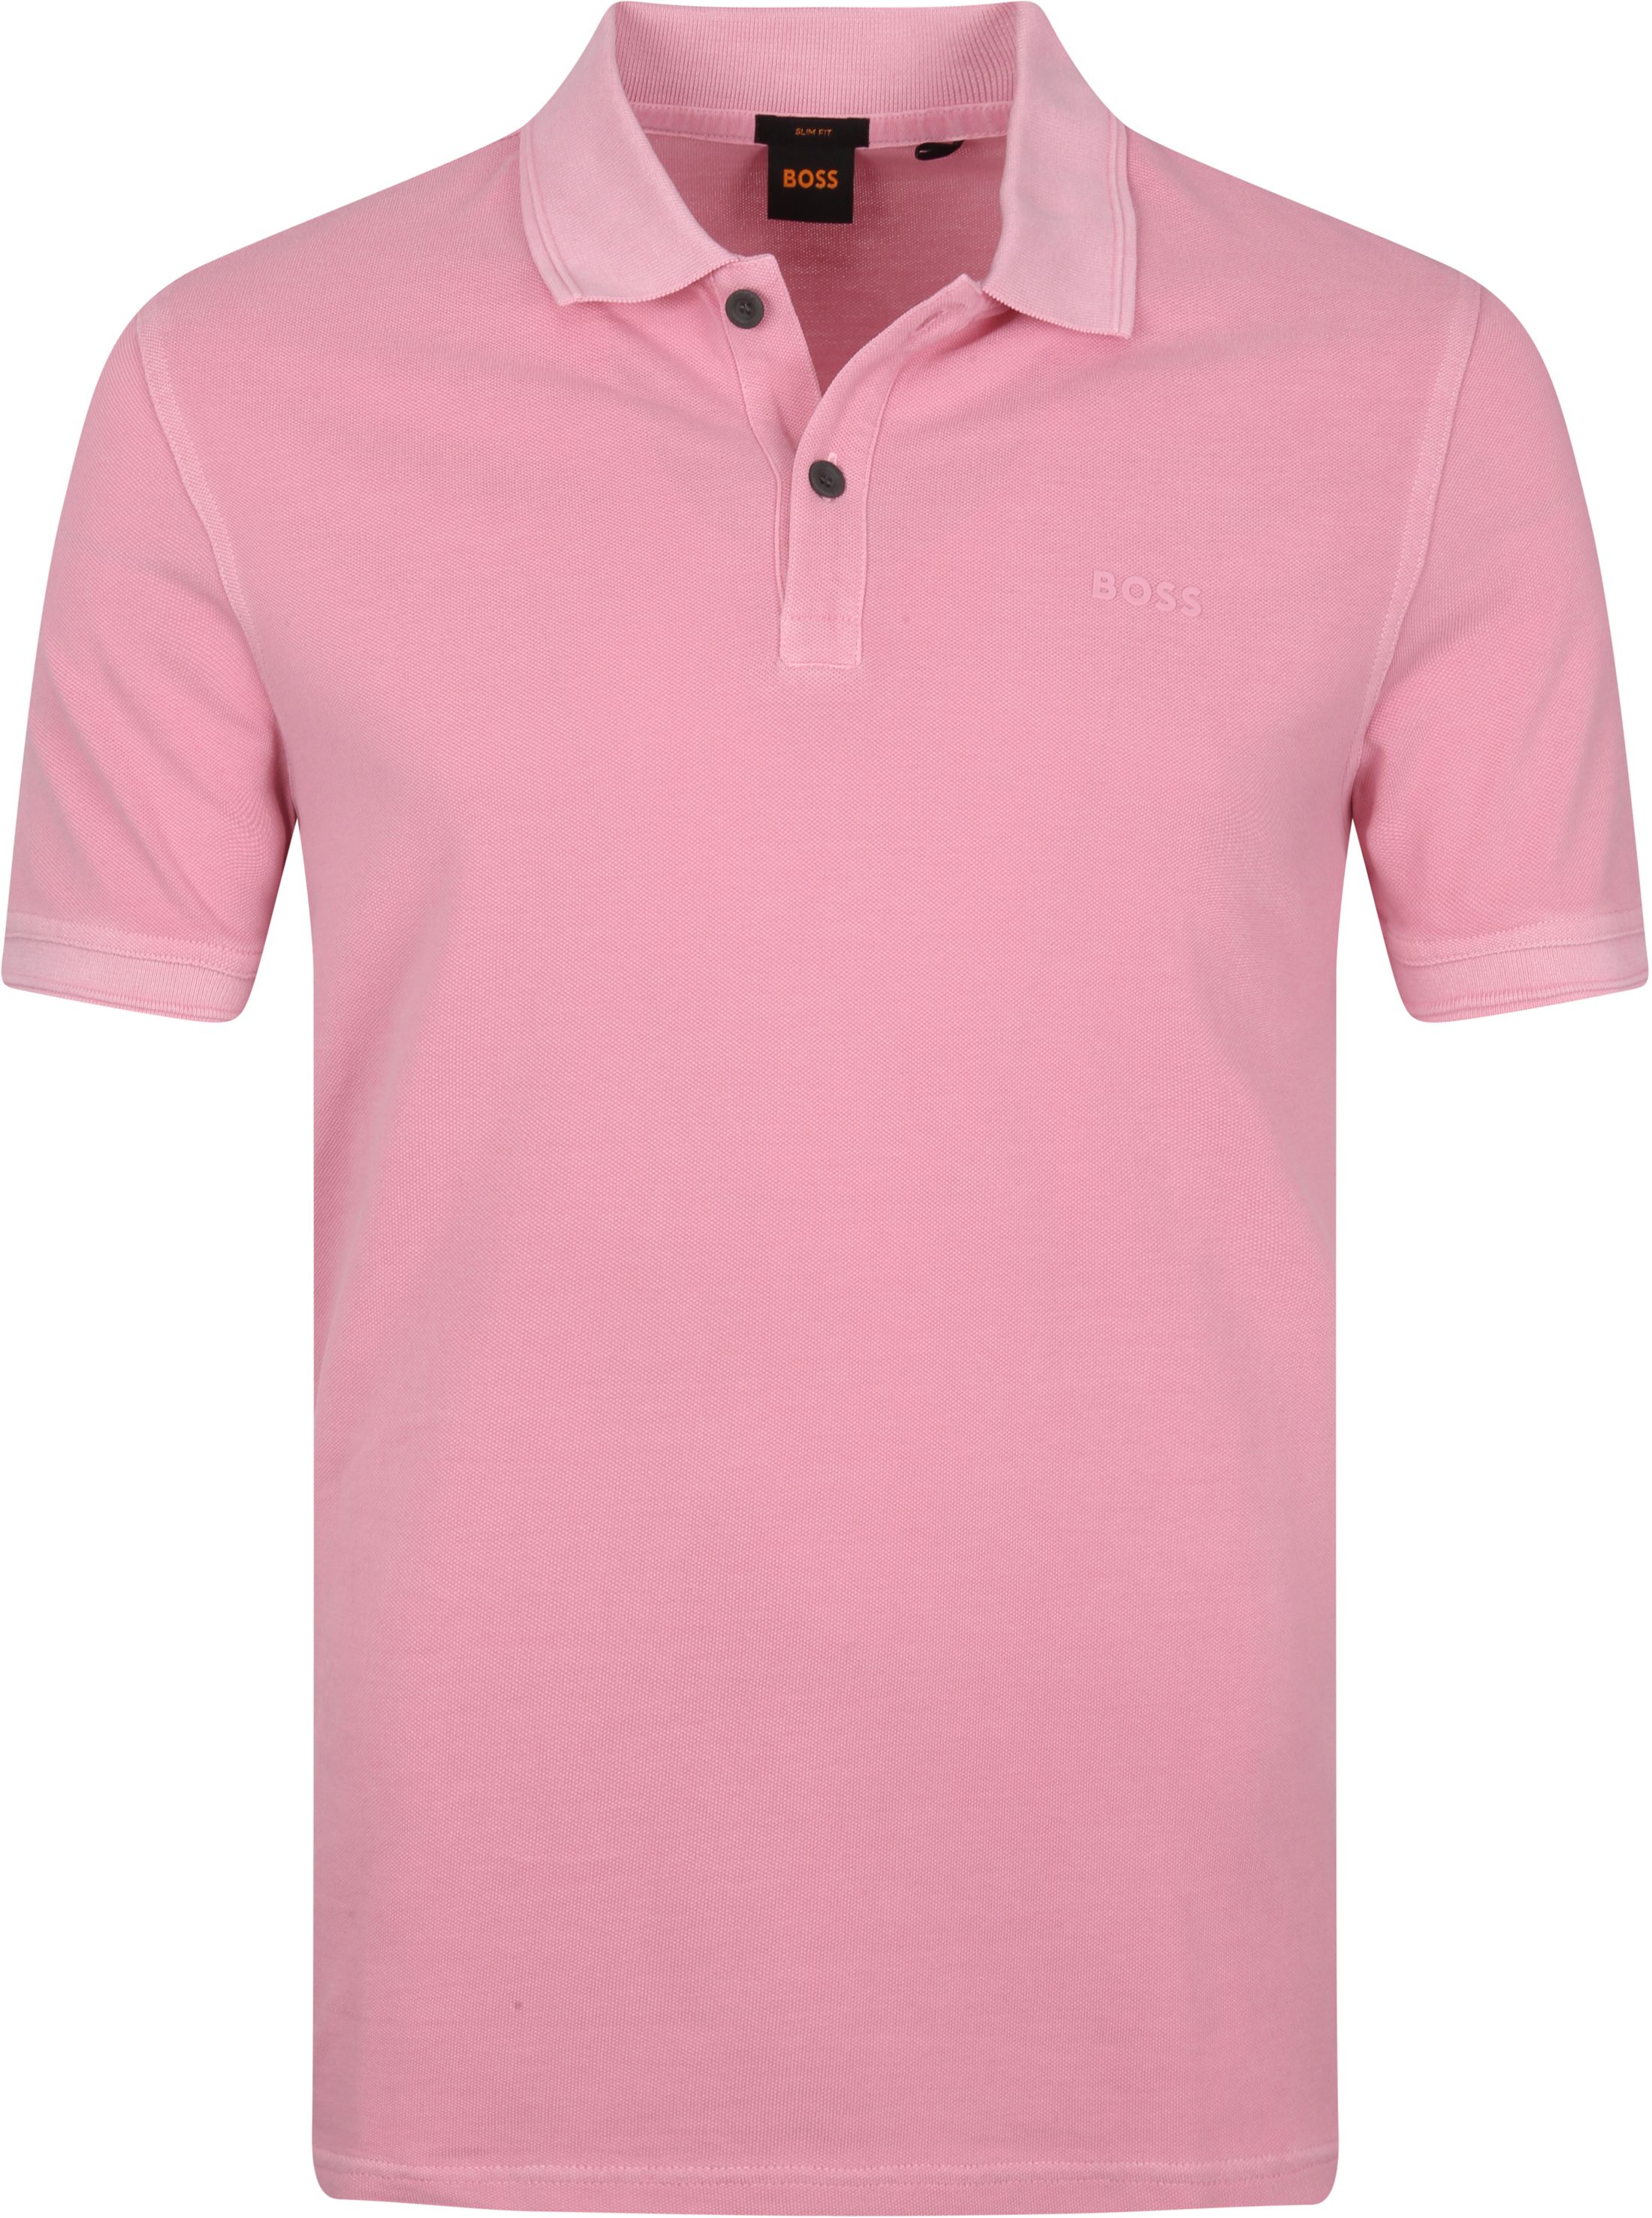 Hugo Boss Prime Polo Shirt Pink size 3XL